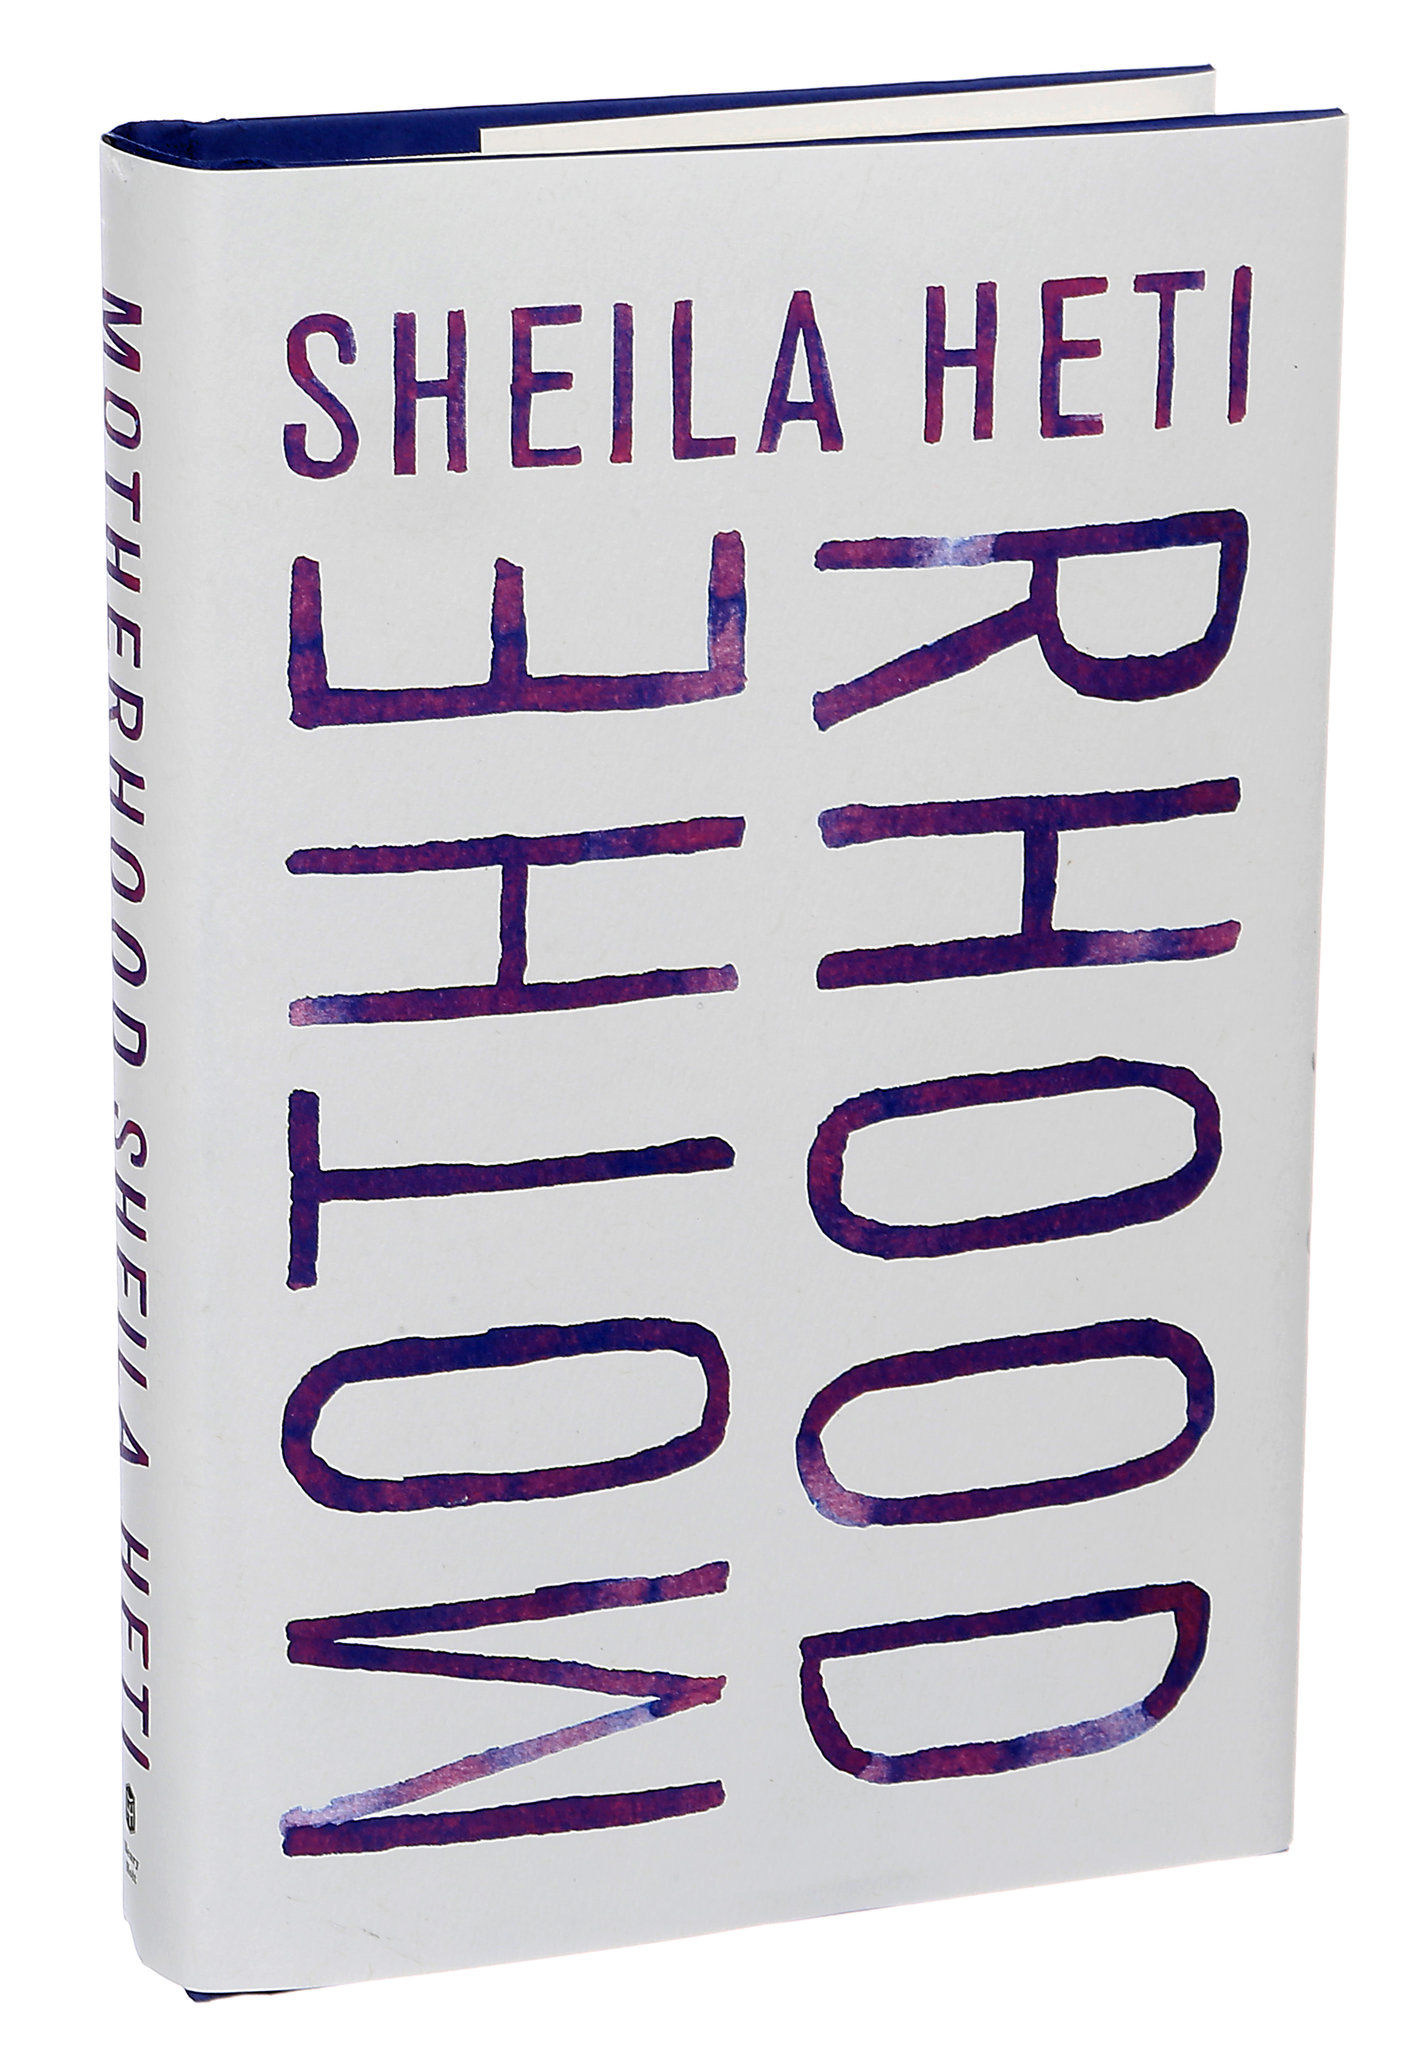 On the Auto-Fictional Novel, Motherhood, by Sheila Heti